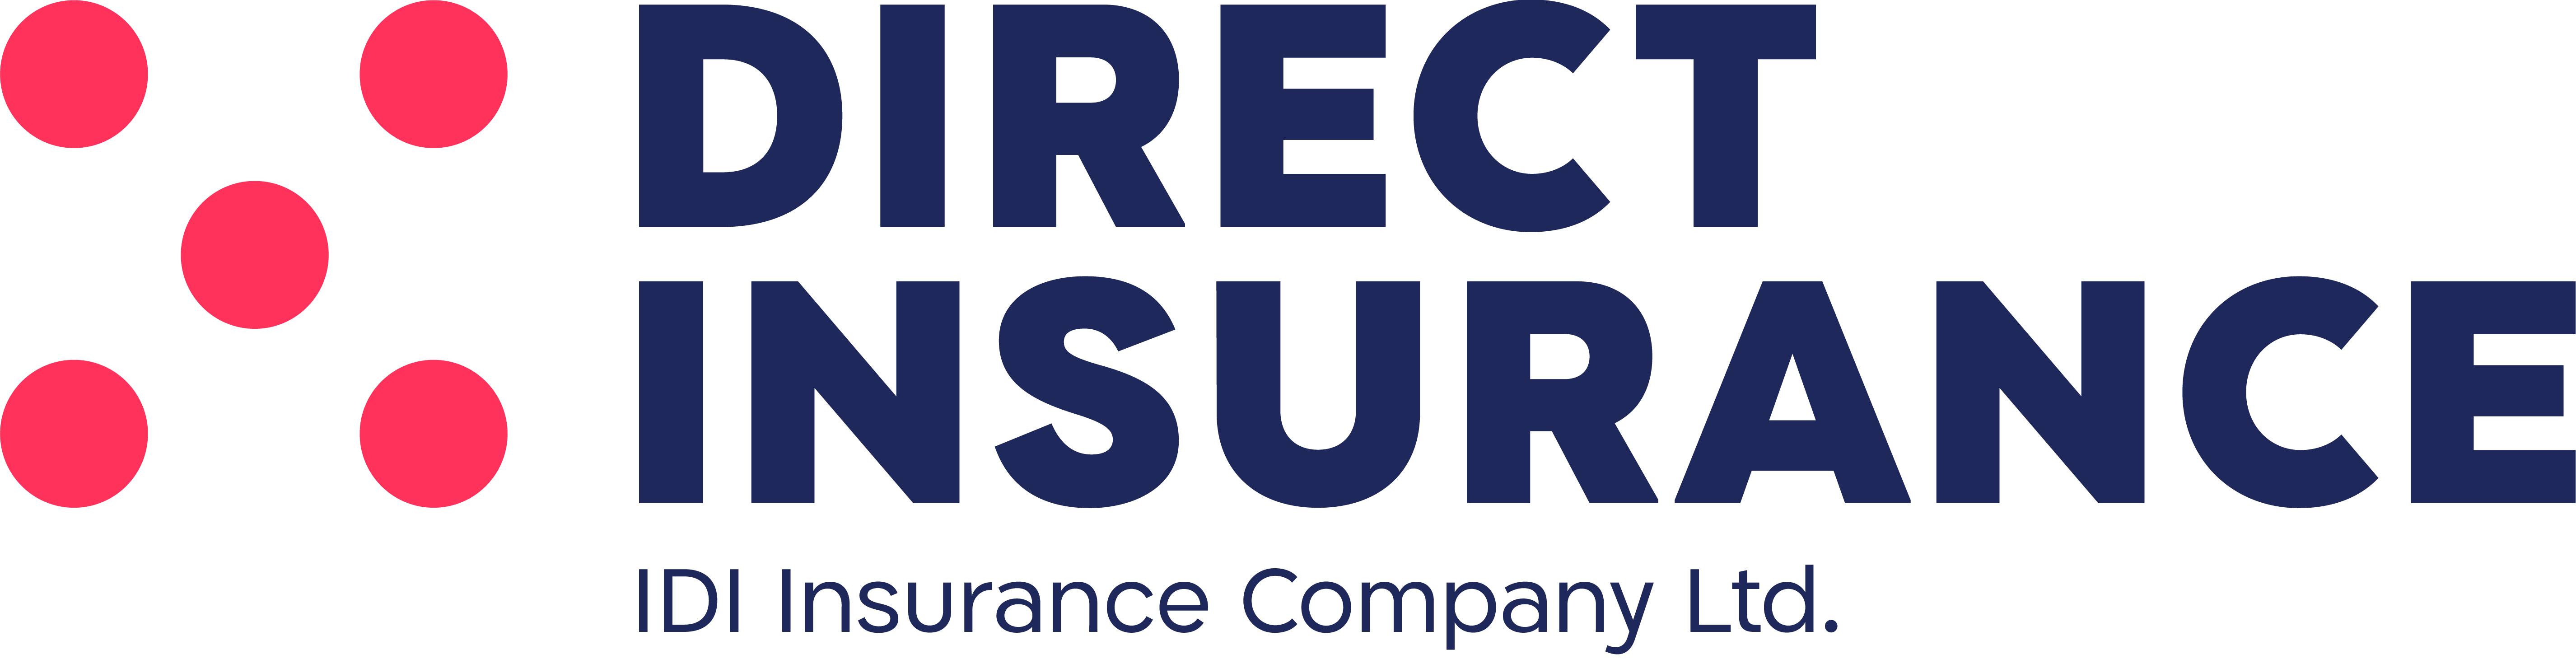 Direct Insurance IDI insurance company Ltd.